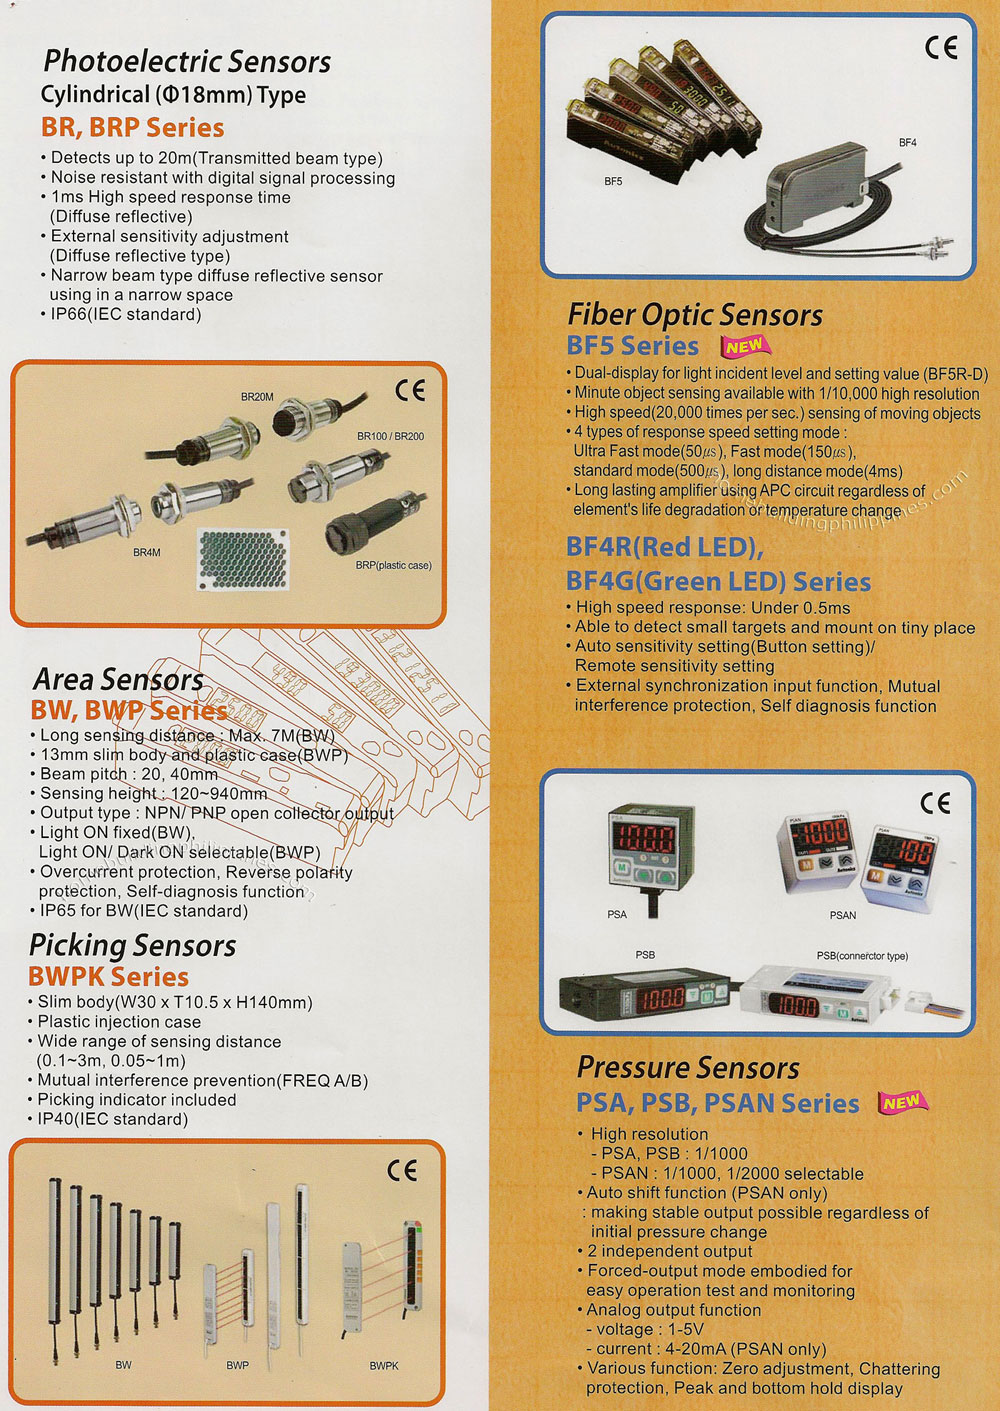 Photoelectric Sensors, Area Sensors, Picking Sensors, Fiber Optic Sensors, Pressure Sensors